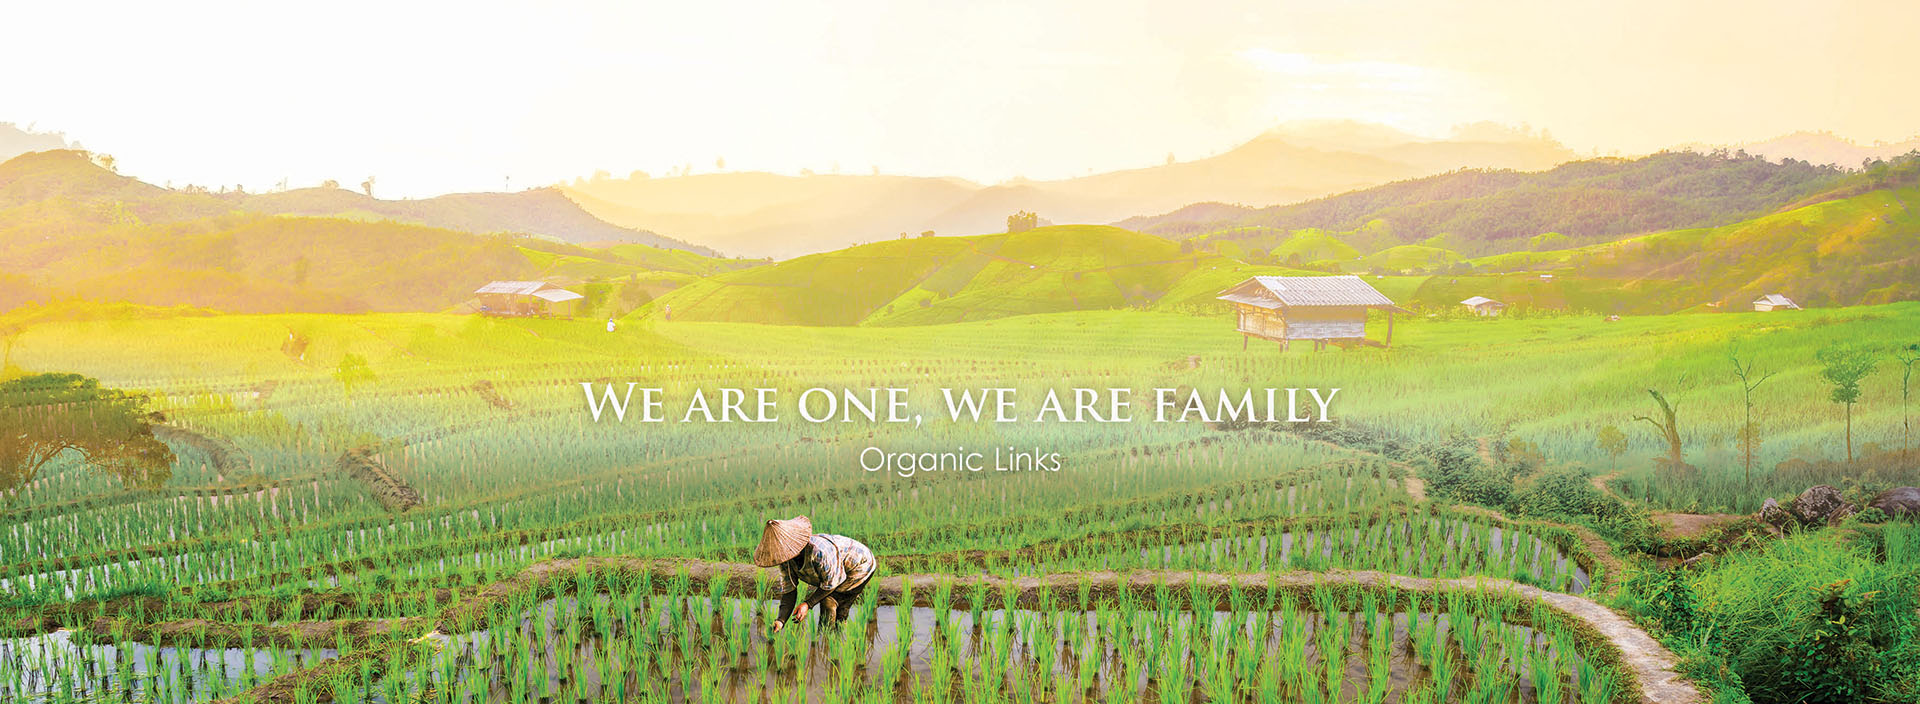 Organic Links